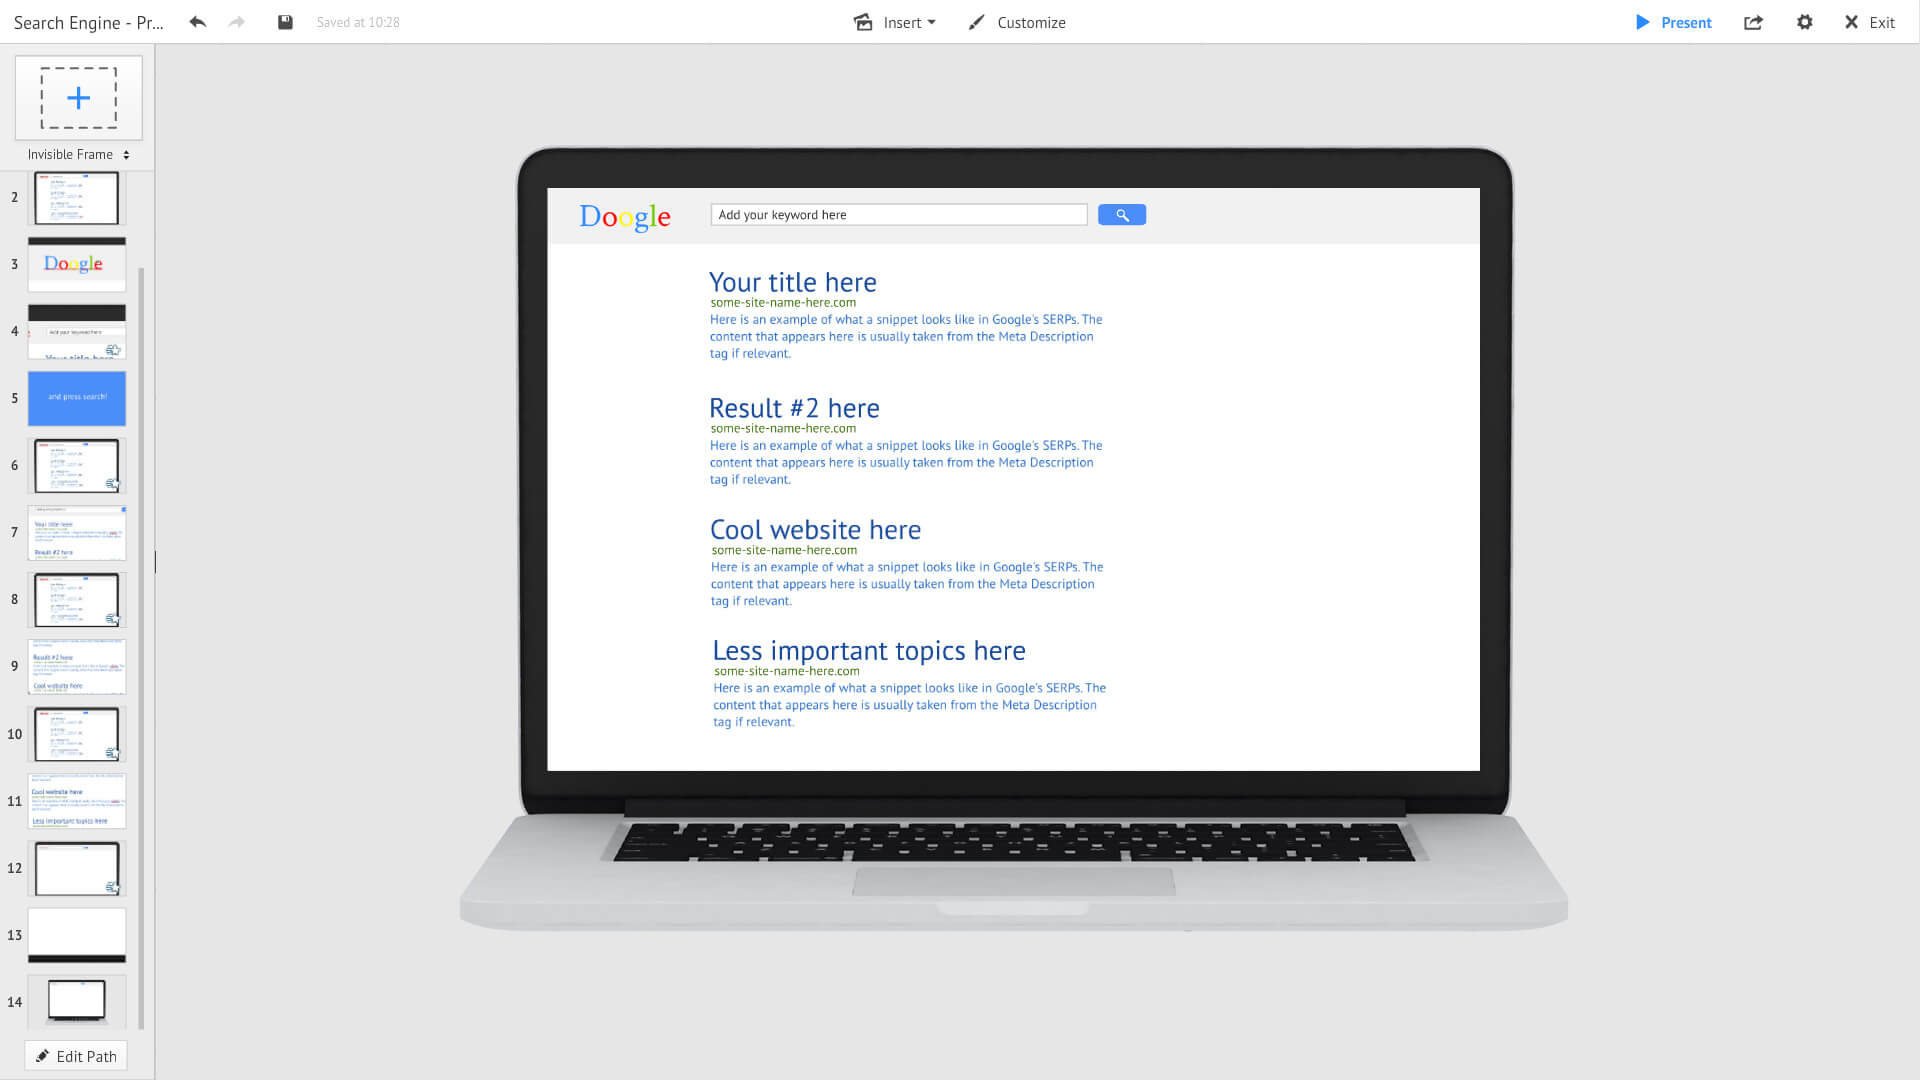 google-search-serp-results-mockup-prezi-template-for-presentations